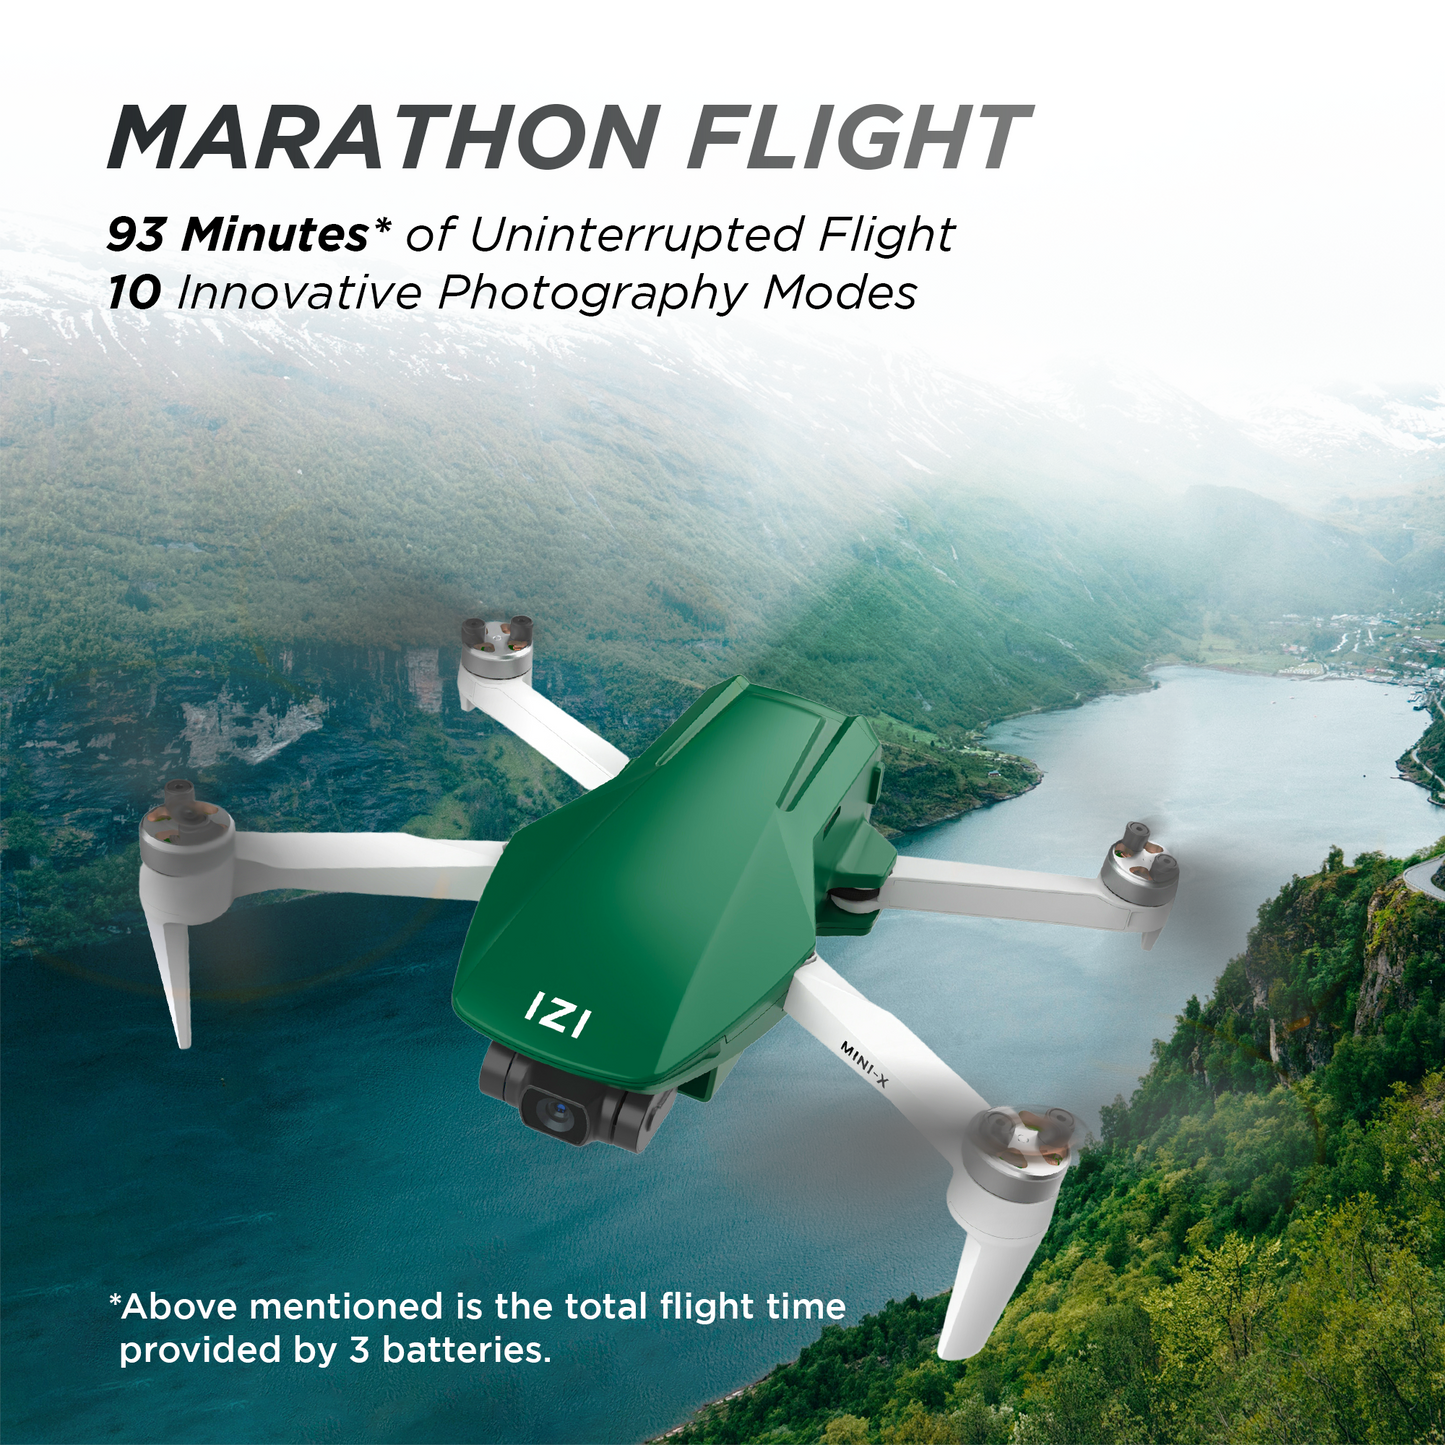 IZI Mini X Nano Fly More Combo 4K Camera Drone UHD 20MP Sony CMOS, 4KM Live Video, 93-min Flight Time, GPS, 3-Axis Gimbal, 10+ Flight Modes, 3 x Smart Battery